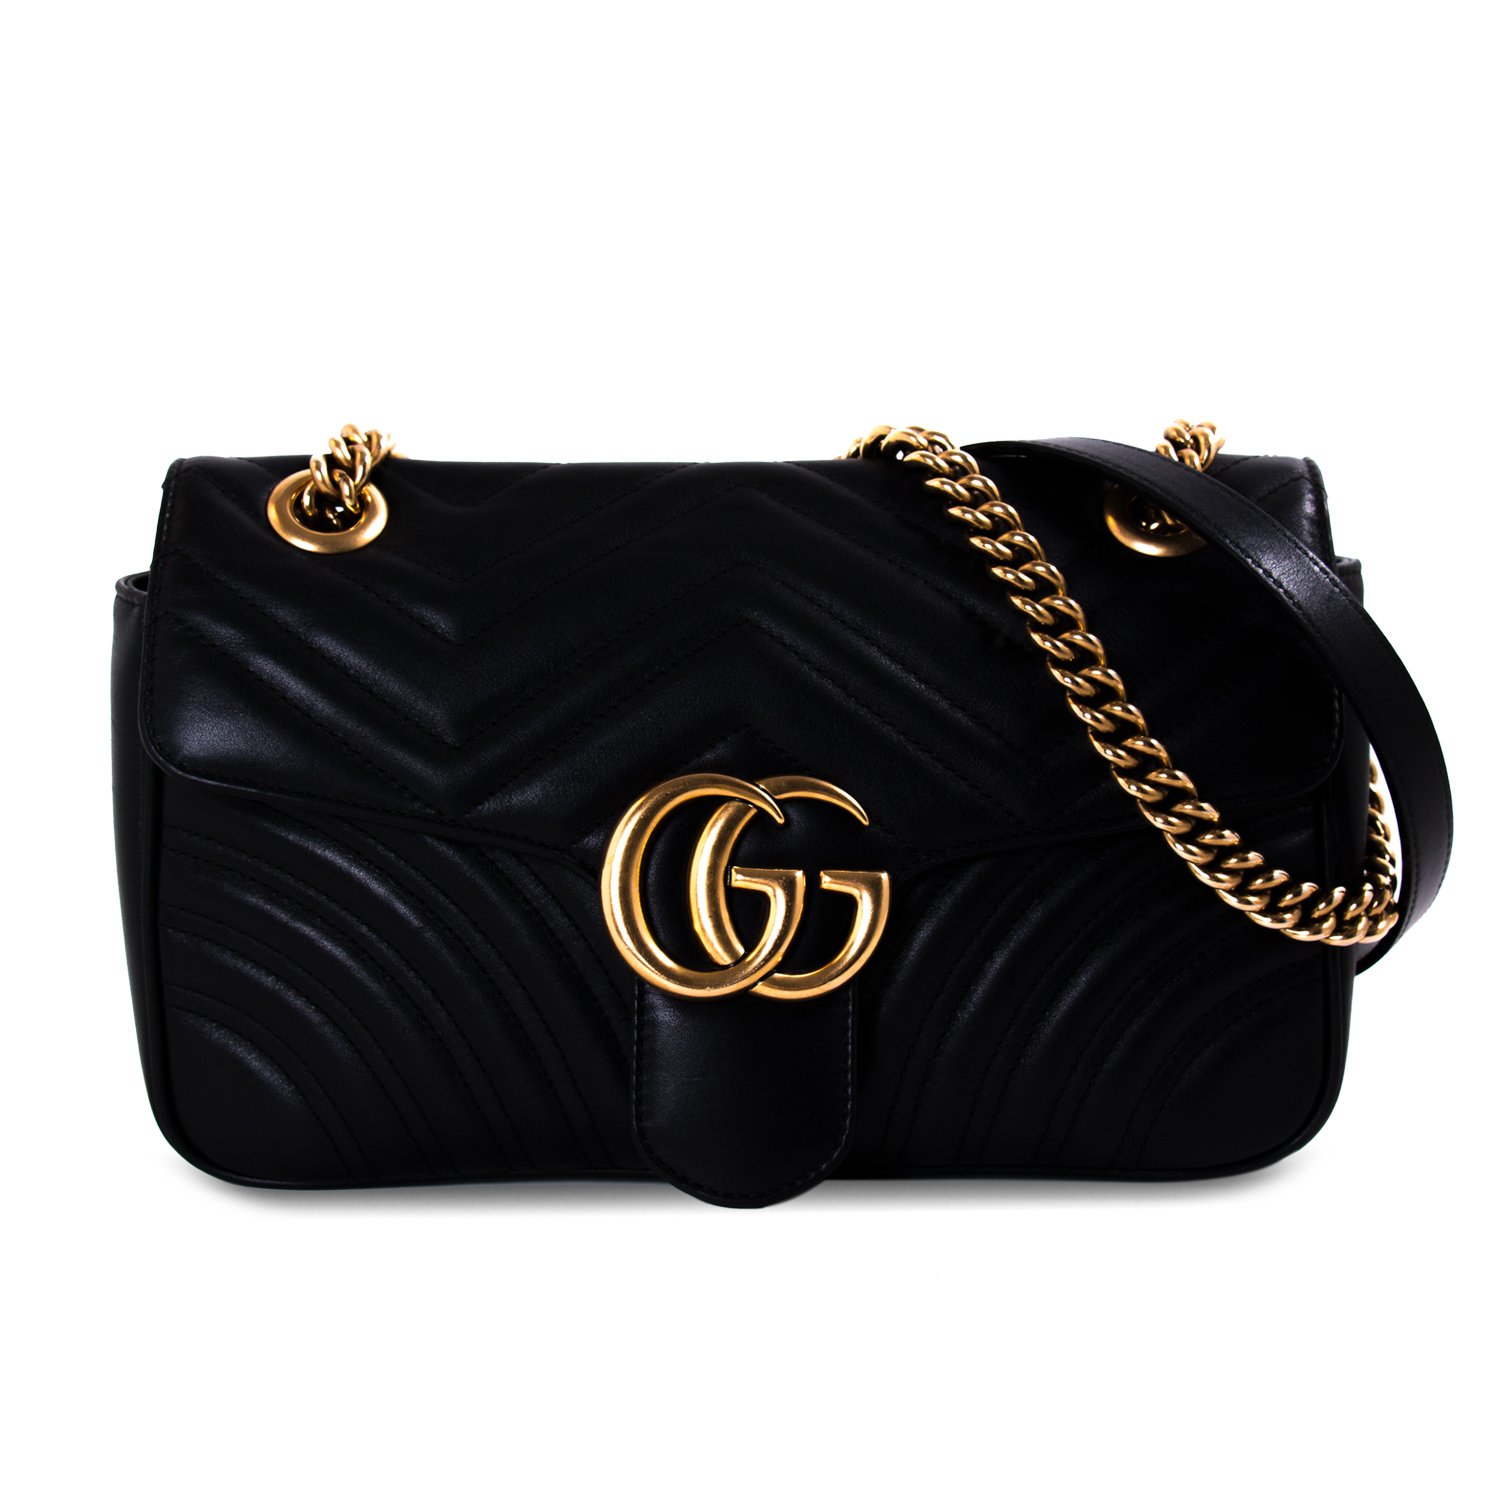 Gucci CG Marmont Black Bag Chain